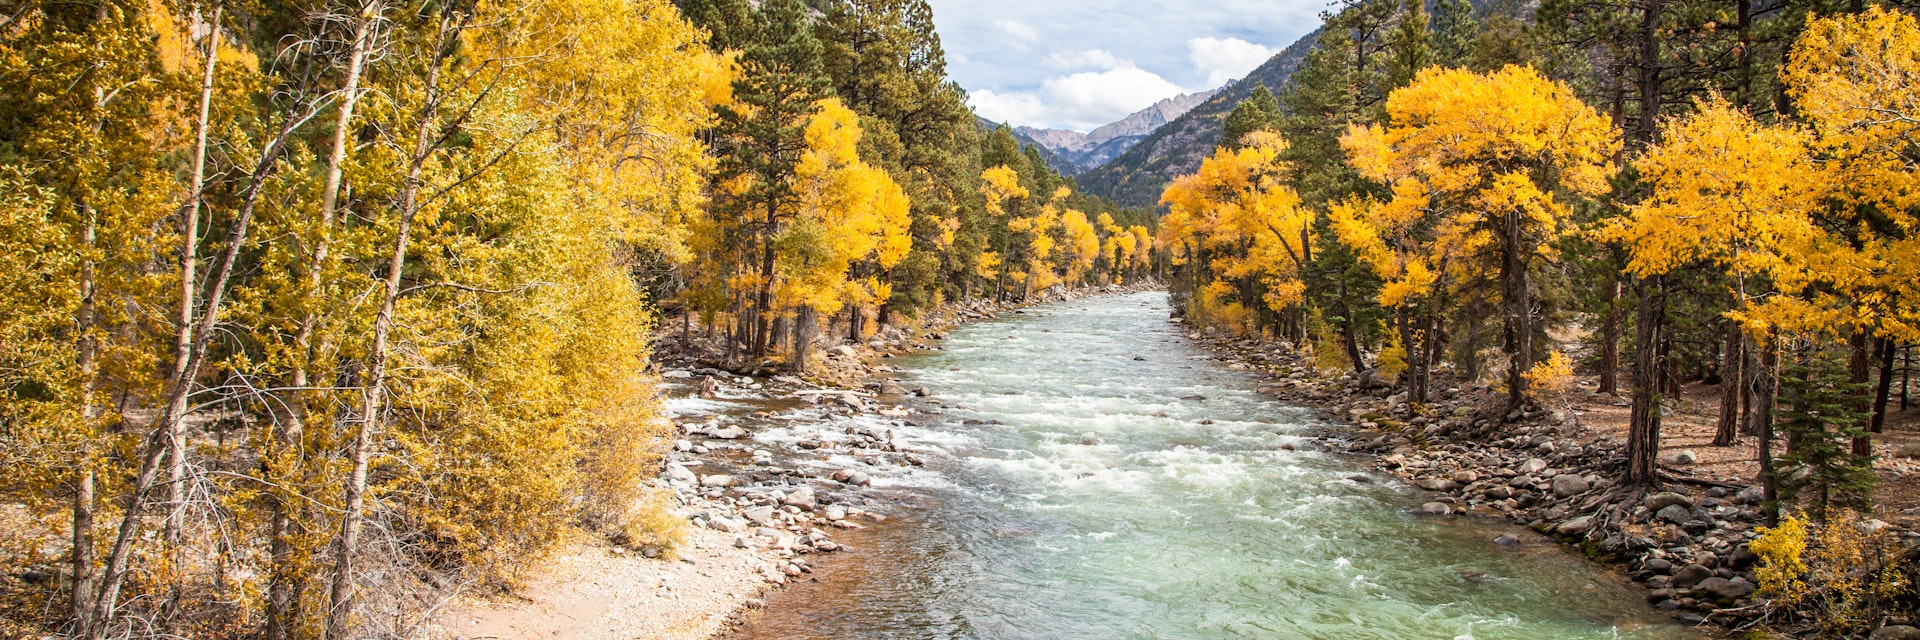 The Animas River running through golden aspens in the Weminuche Wilderness area before reaching the city of Durango.